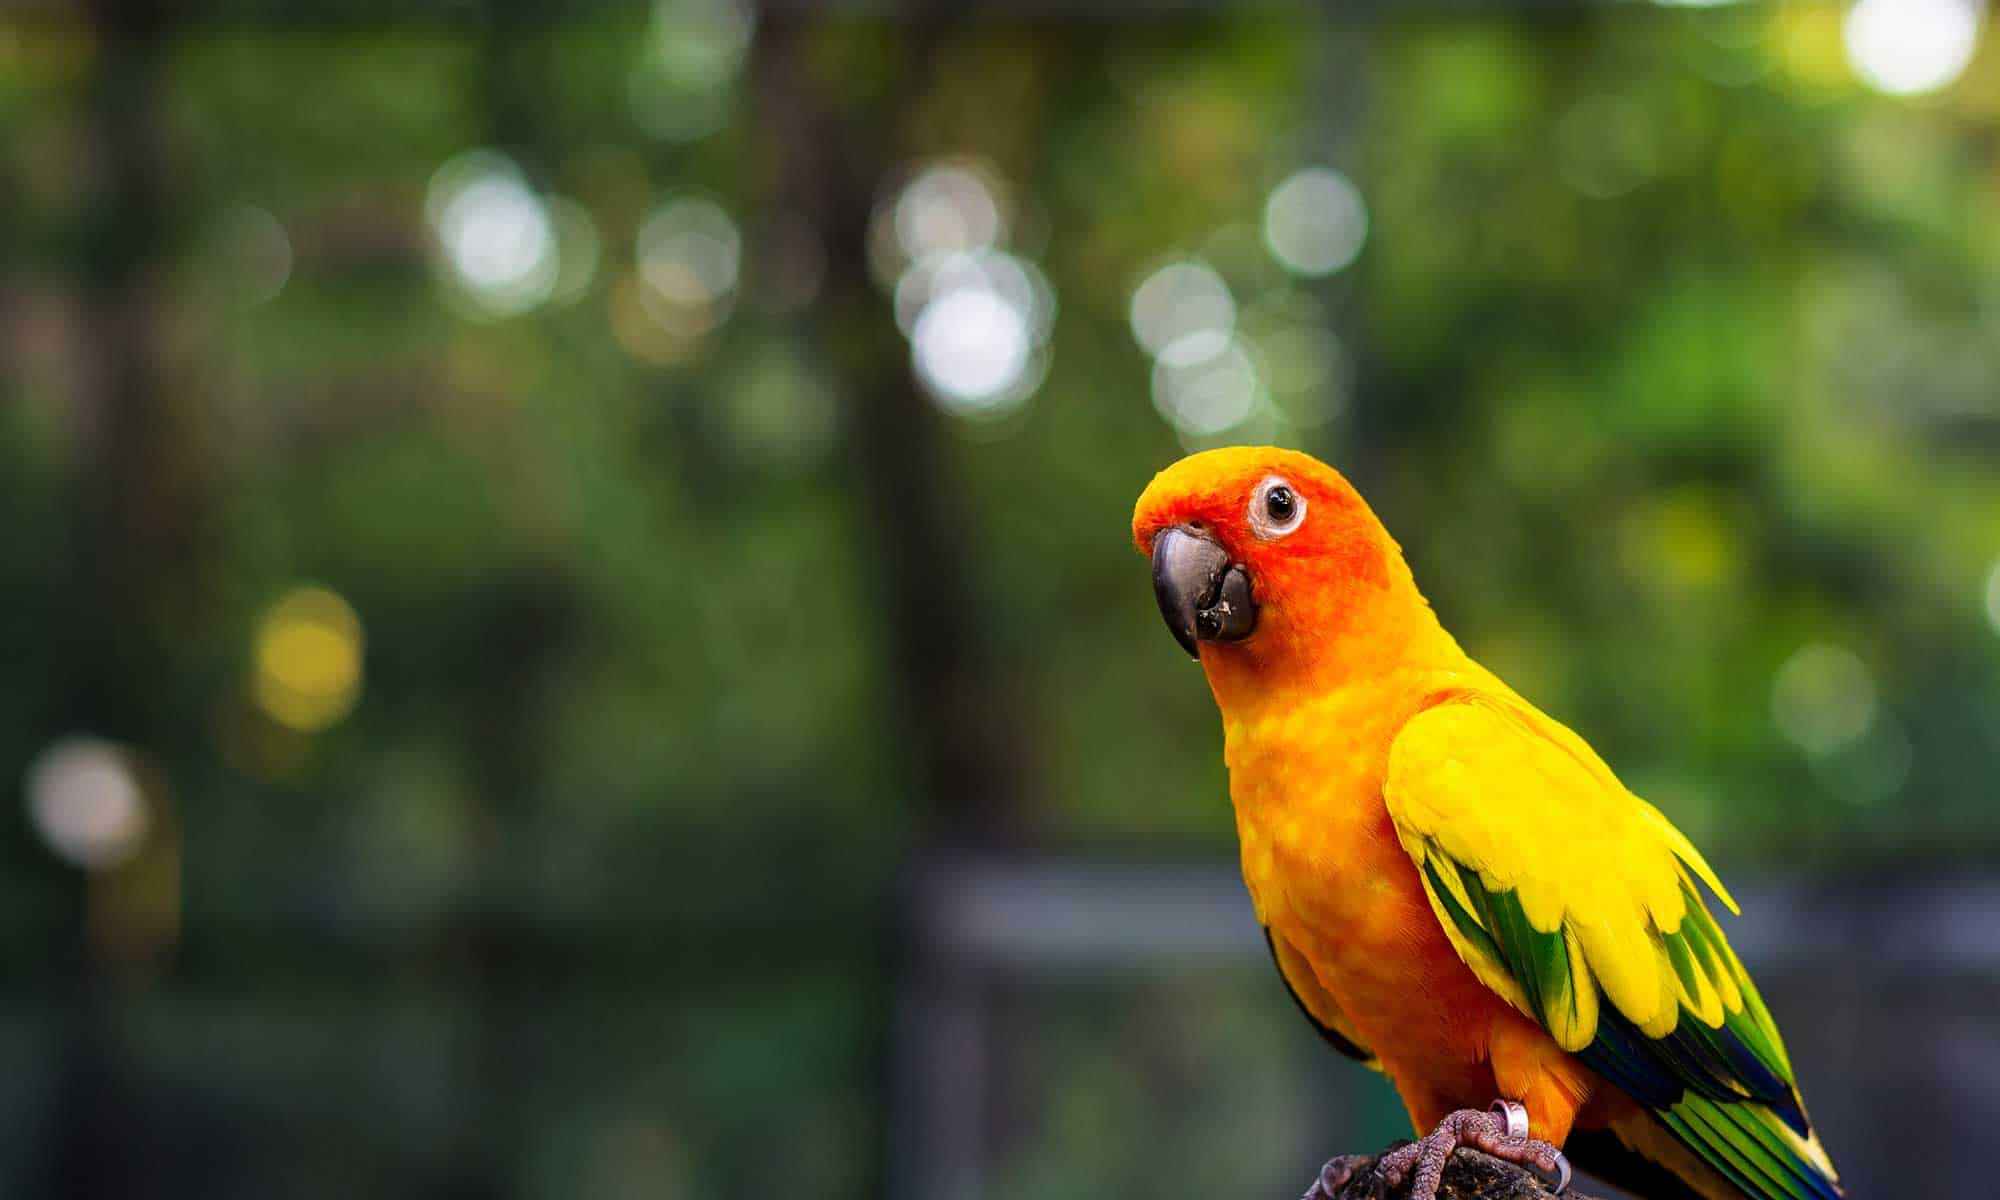 A colorful bird